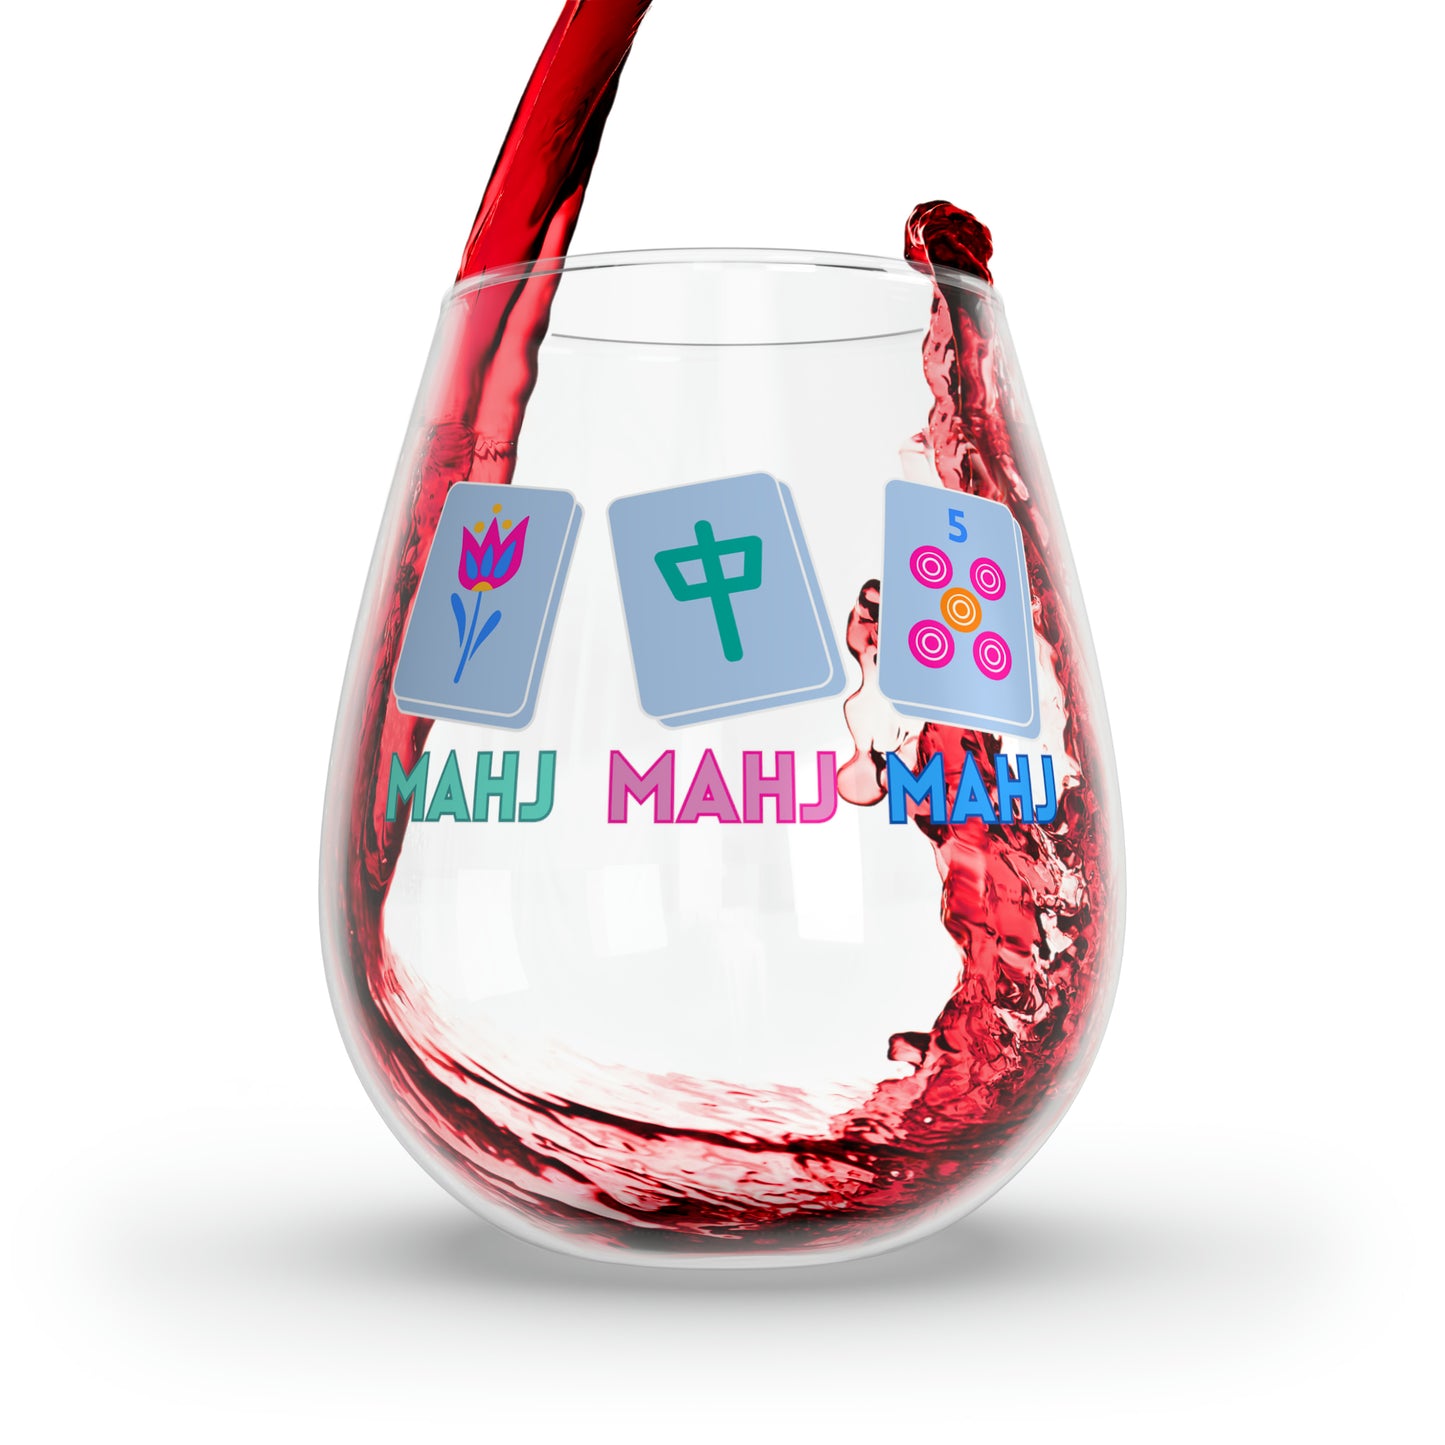 Mahjong wine glass with colorful bright mahjongg tiles mahj mahj mahj gift for party or game night